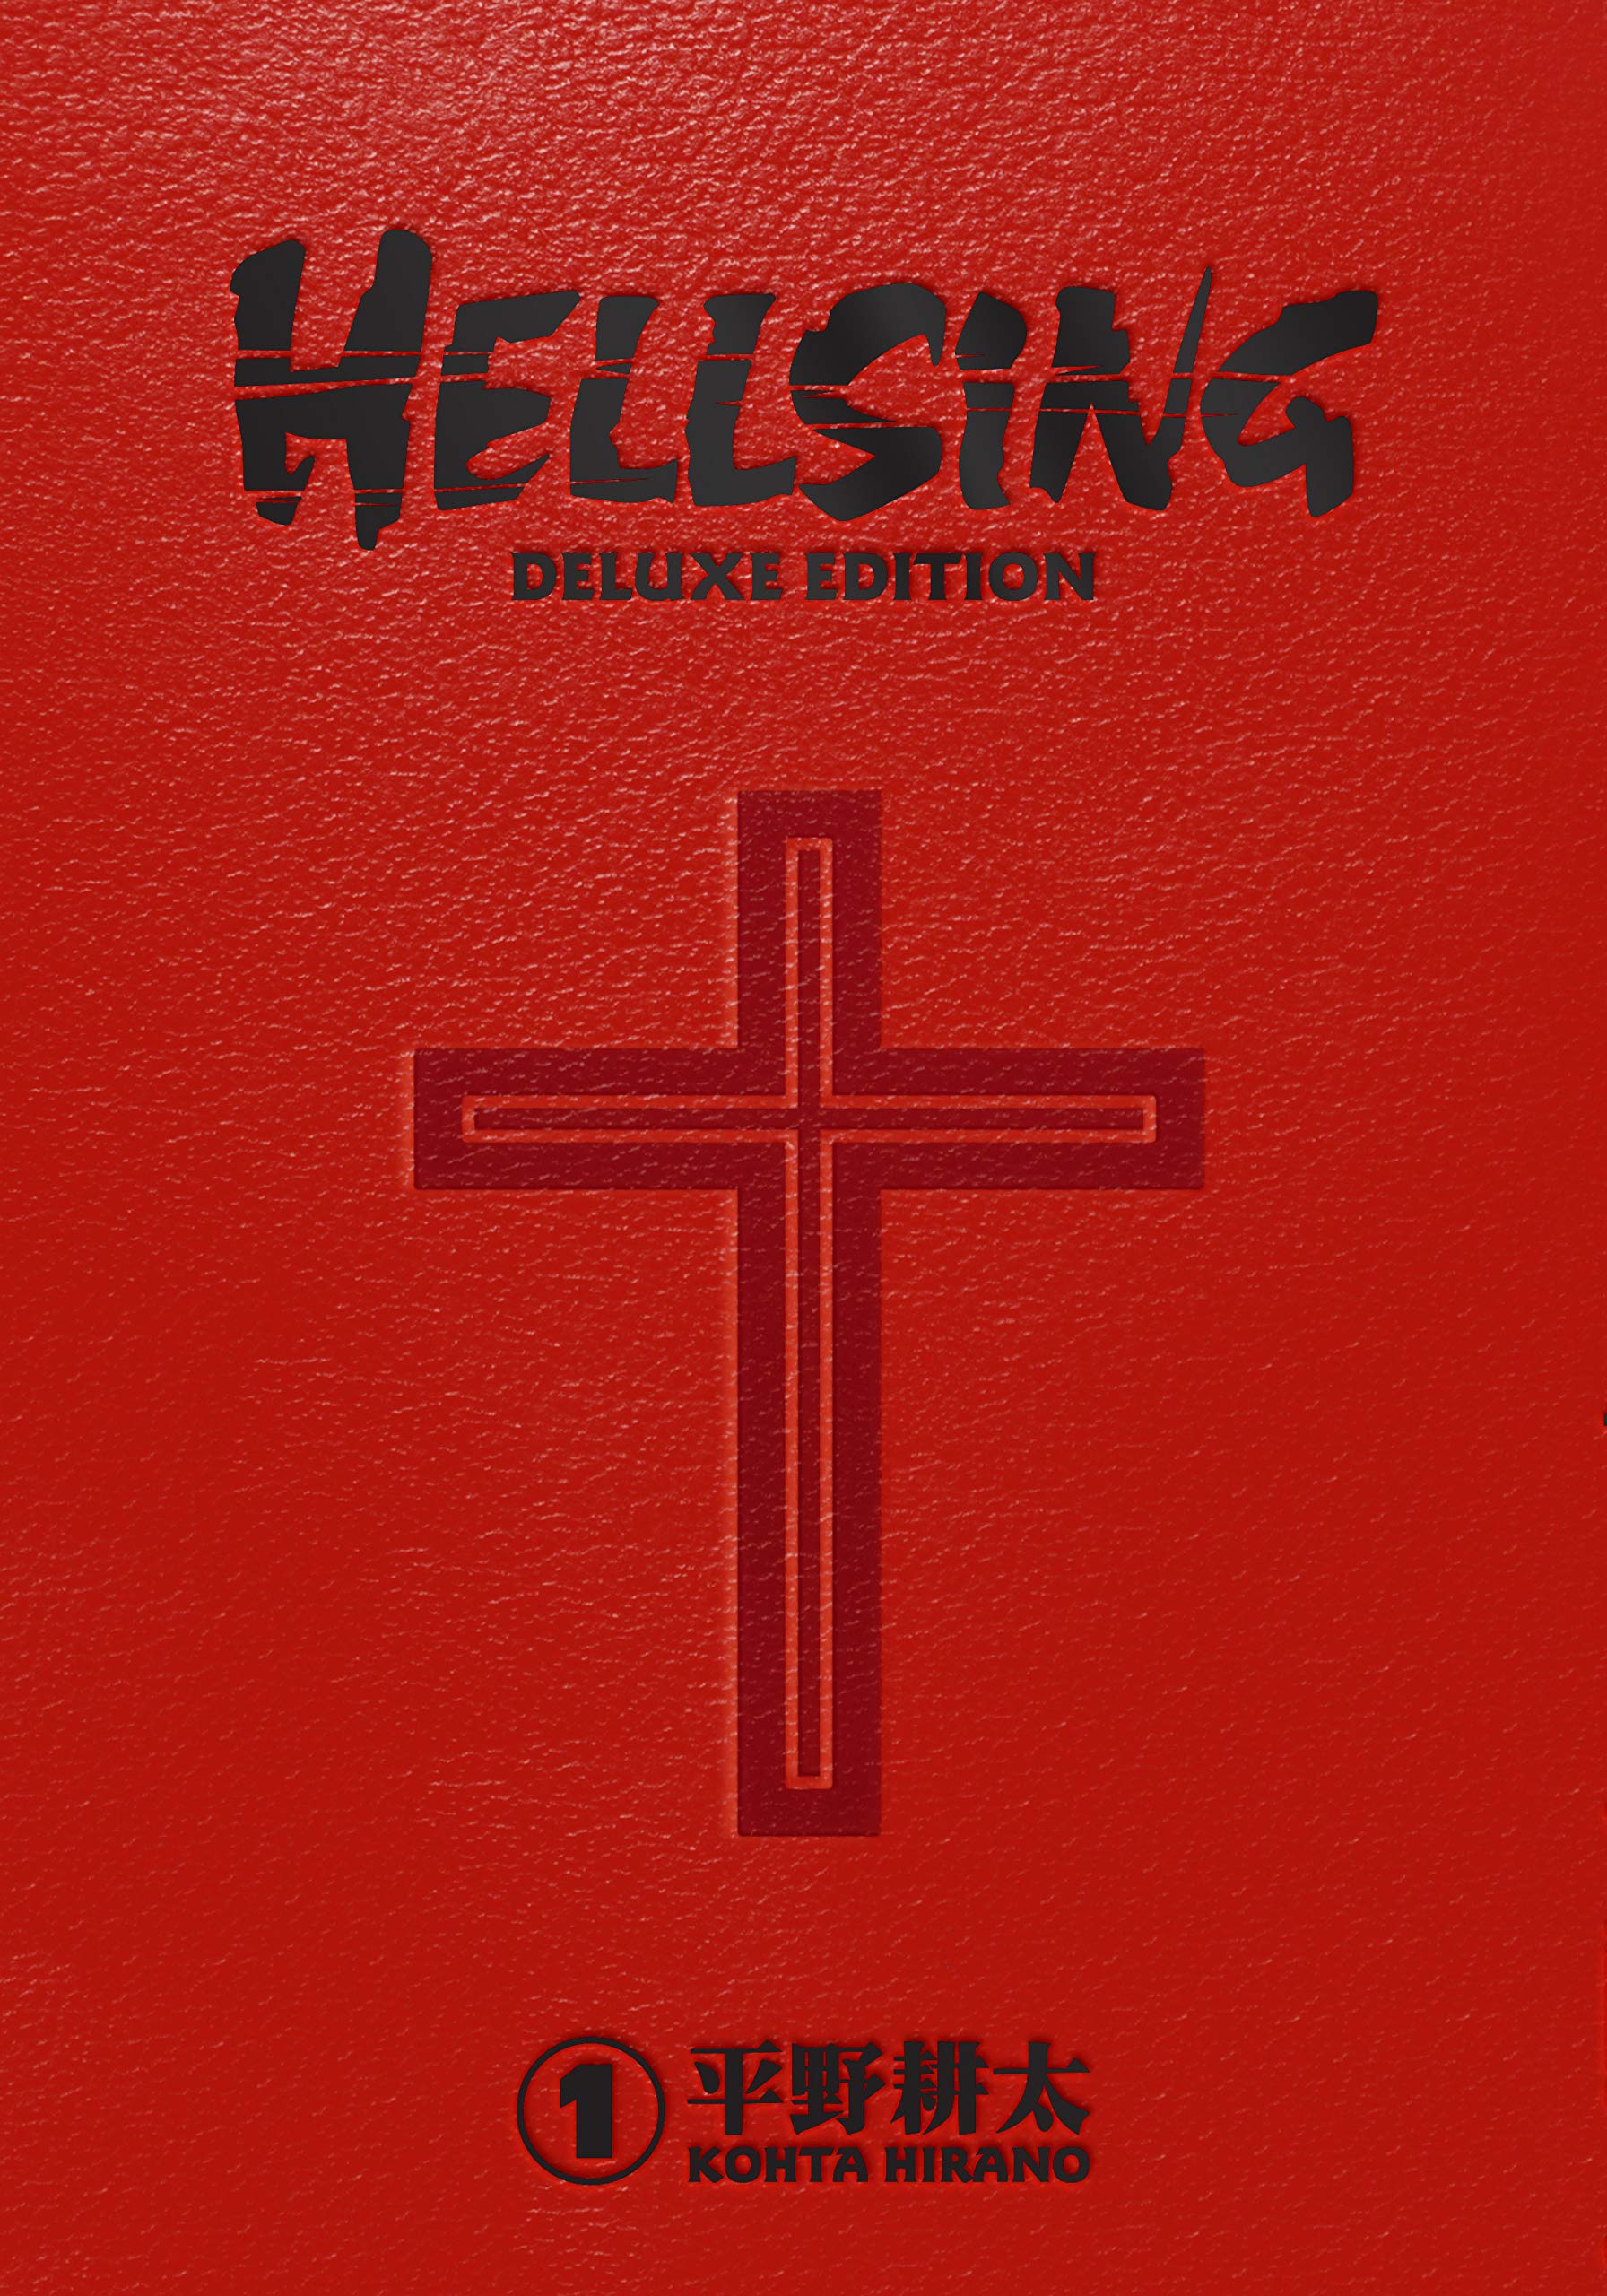 Hellsing: Deluxe Edition - Volume 1